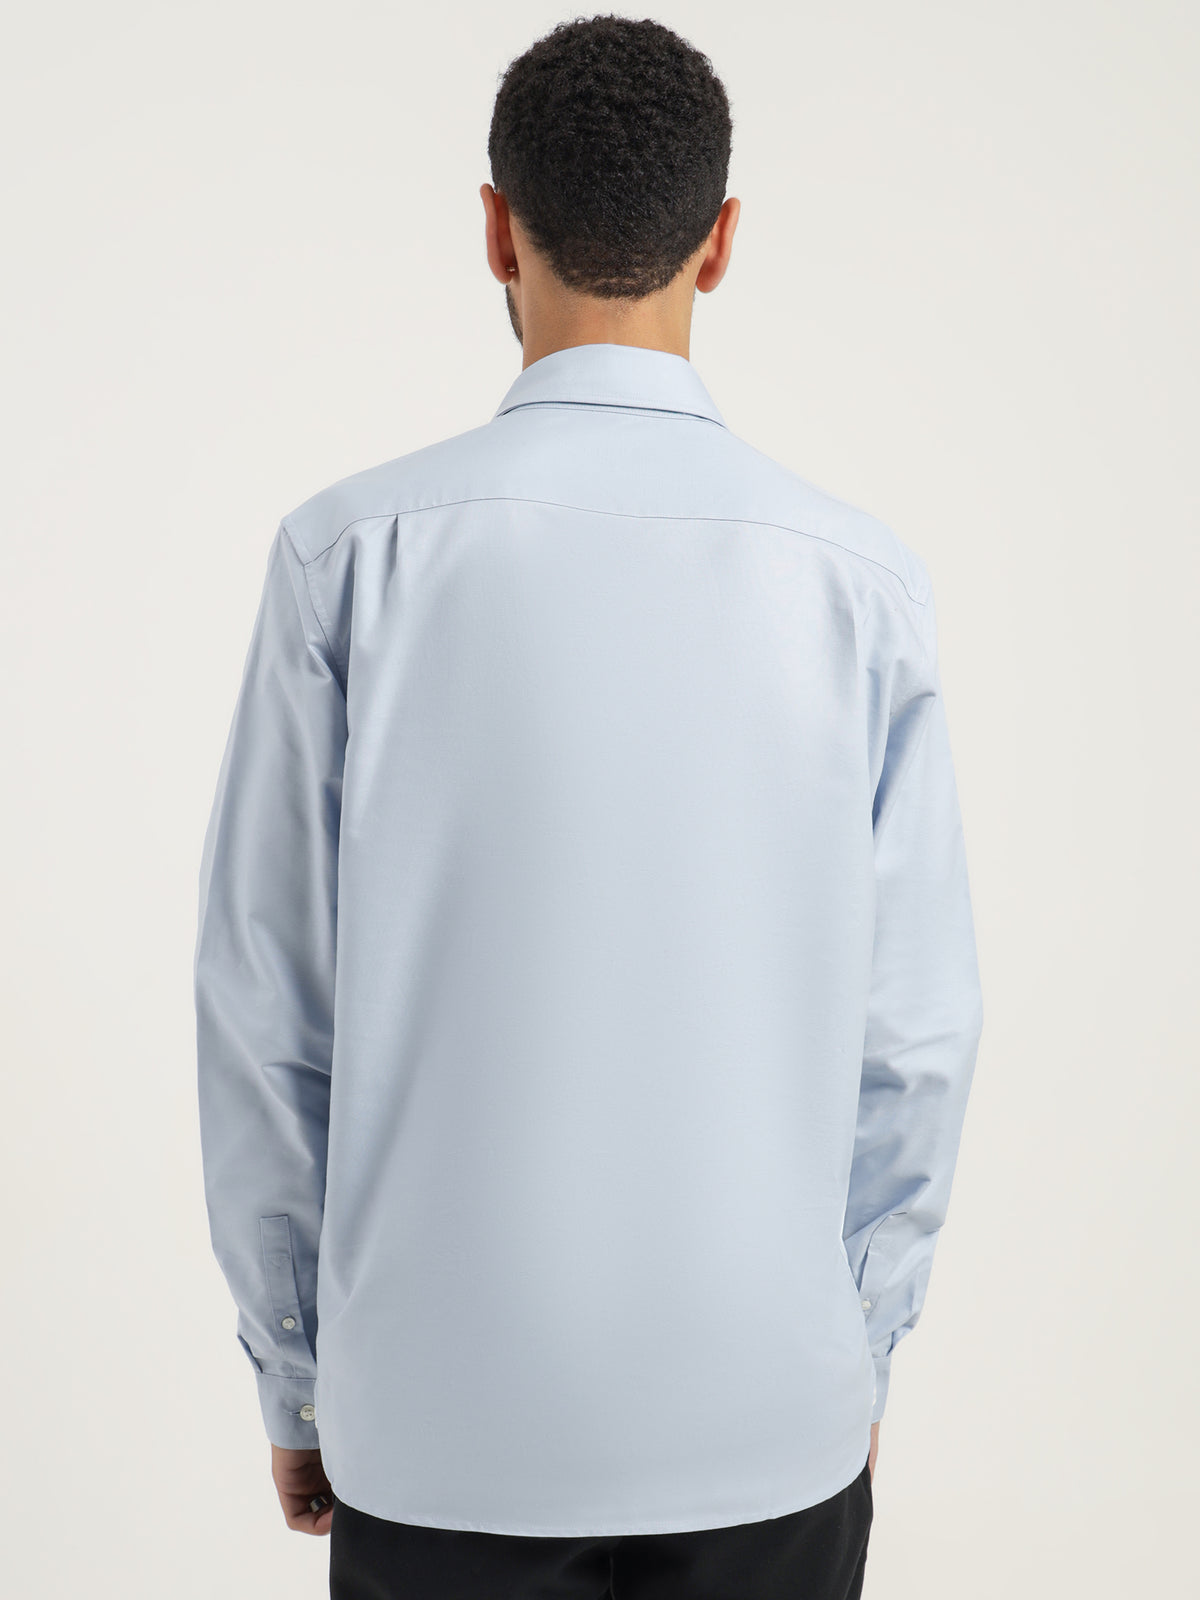 Long Sleeve Oxford Shirt in Smoke Blue